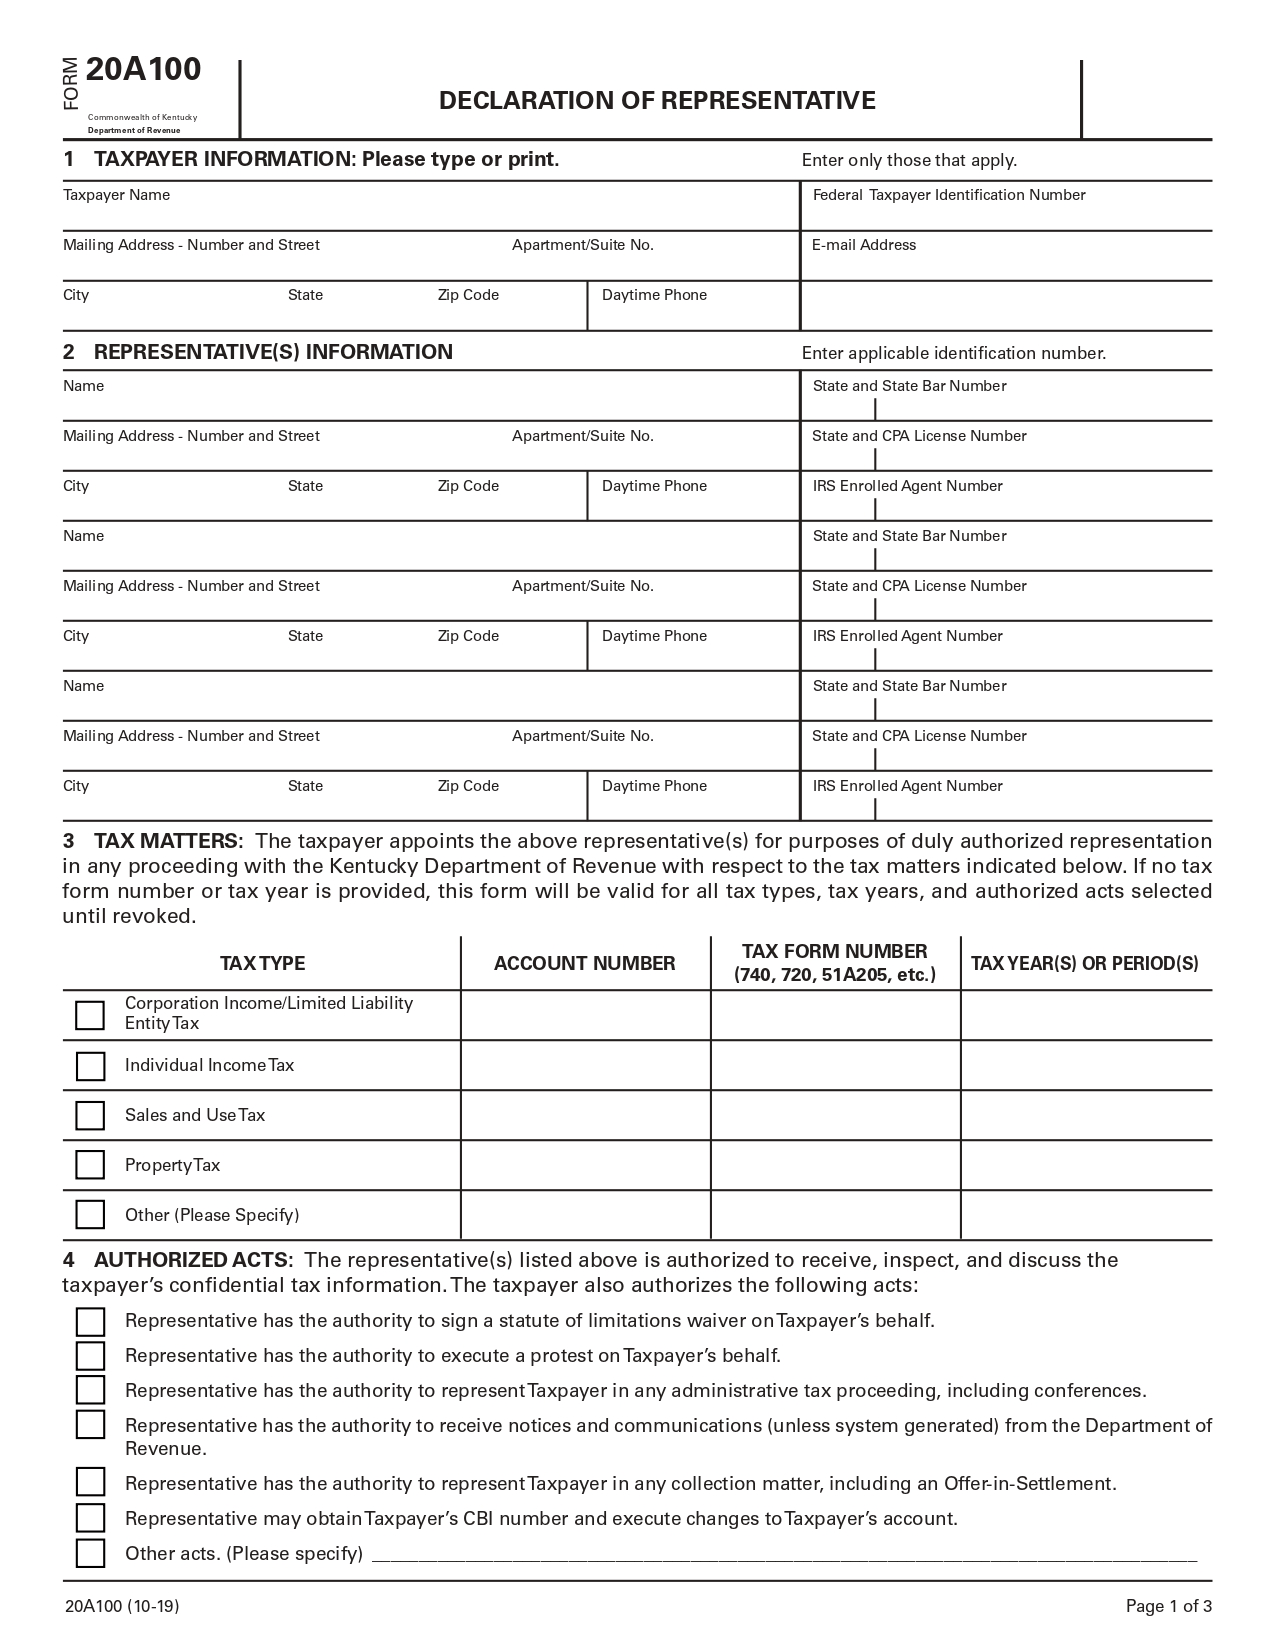 Kentucky Tax Power of Attorney Form 20A100